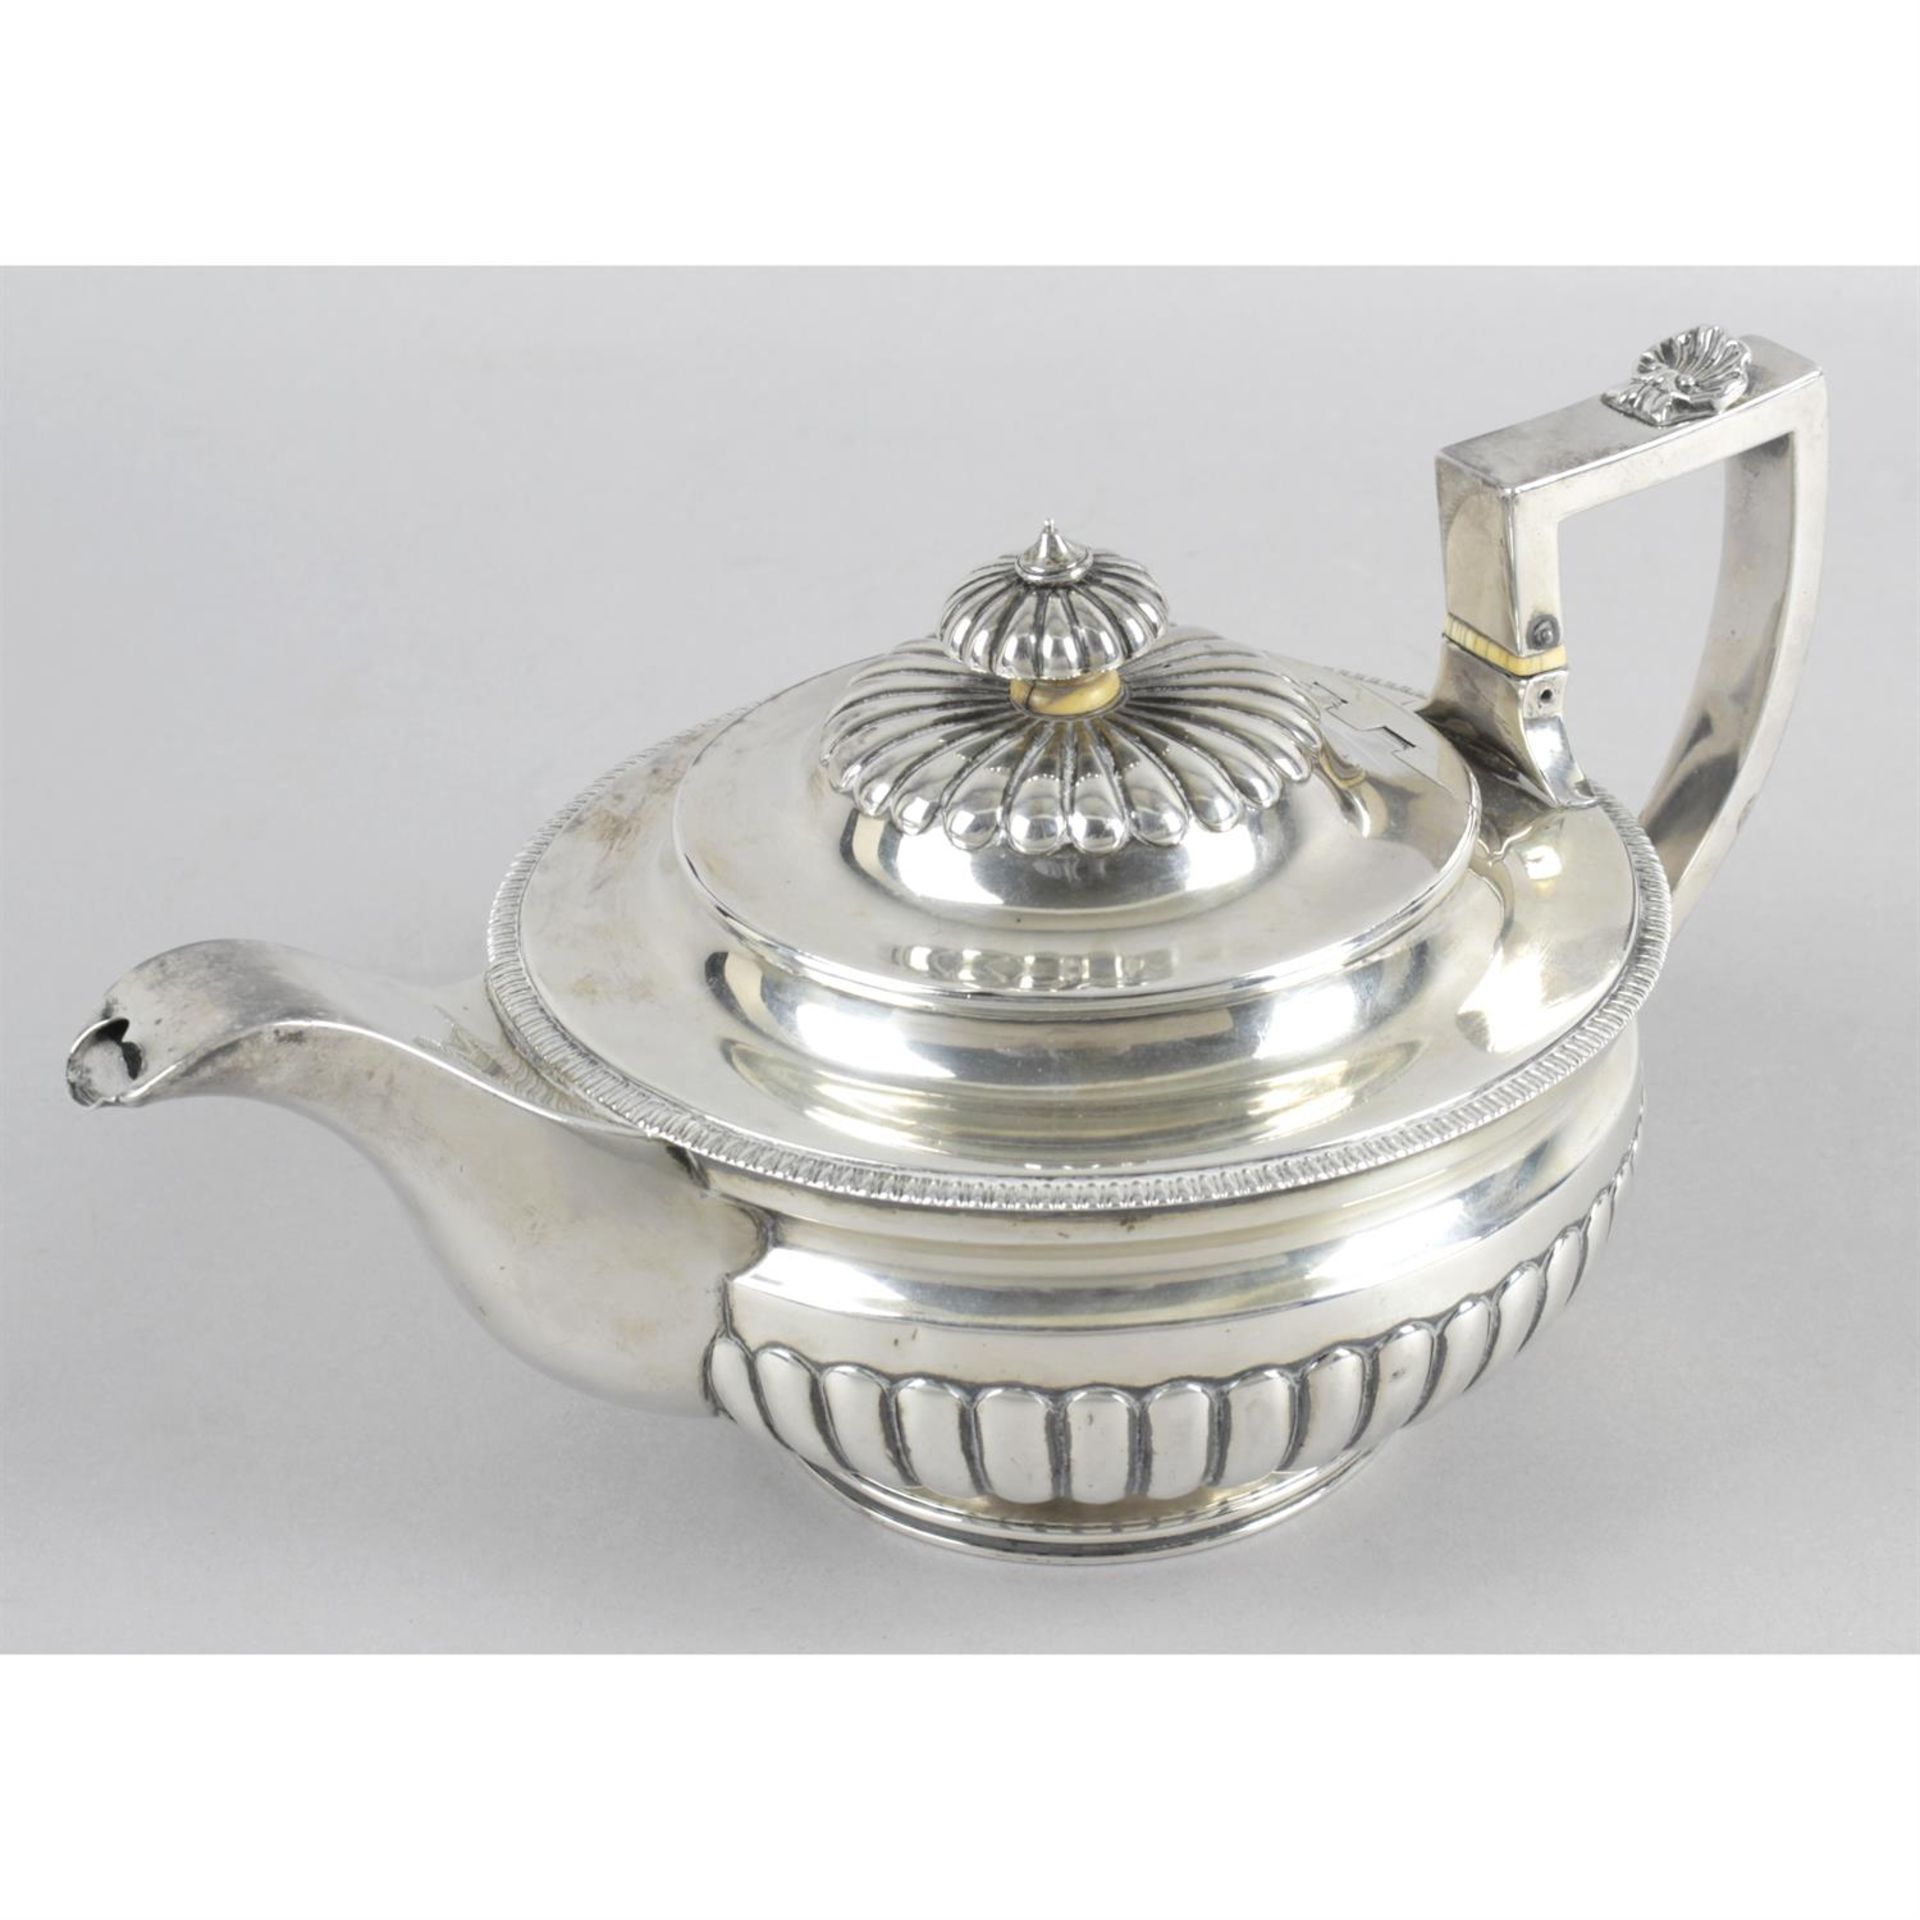 A late George III silver teapot.